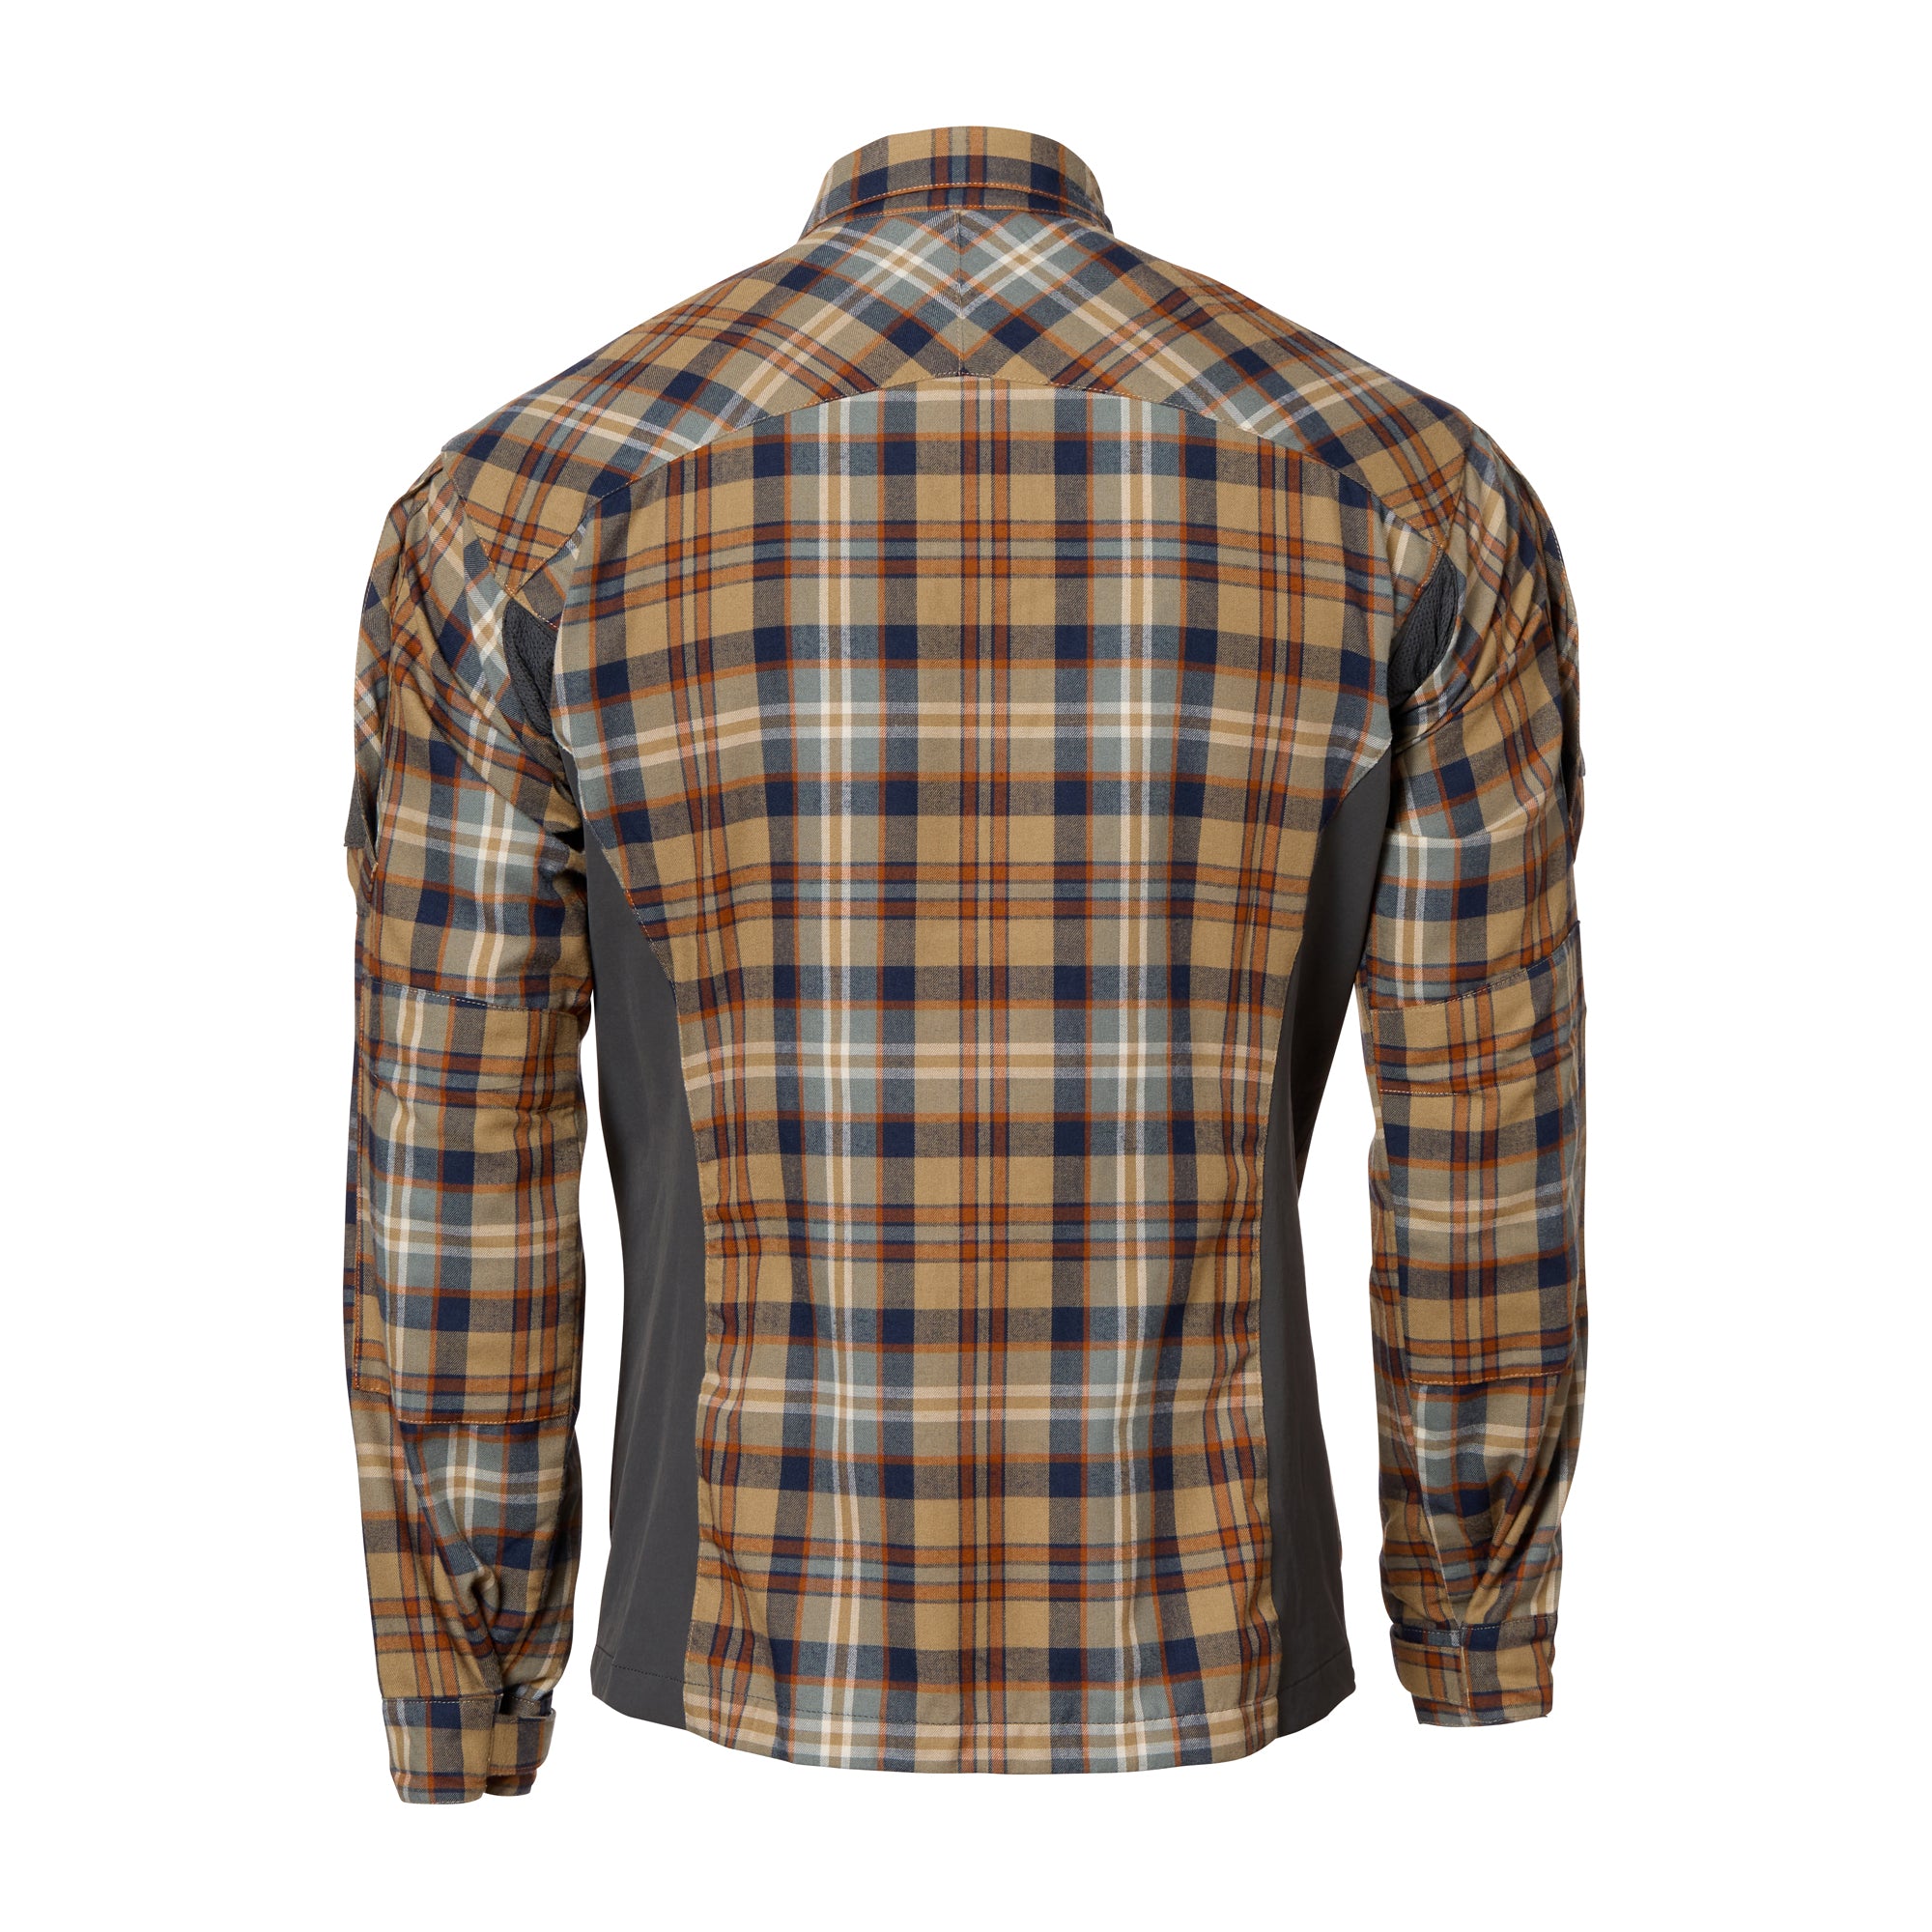 Helikon-Tex Hemd MBDU Flannel Shirt ginger plaid